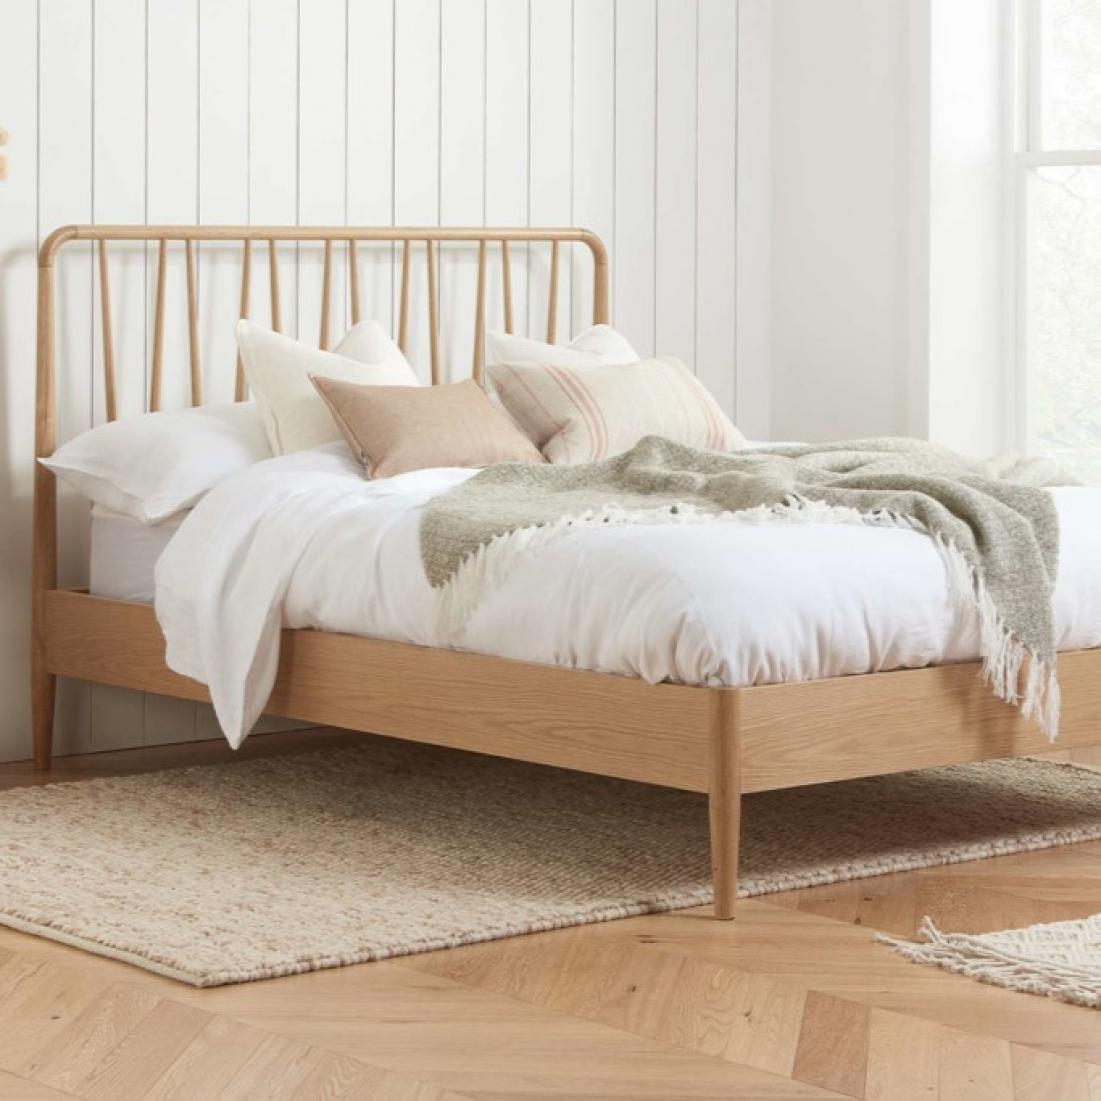 Jesper Bed beds and matresses